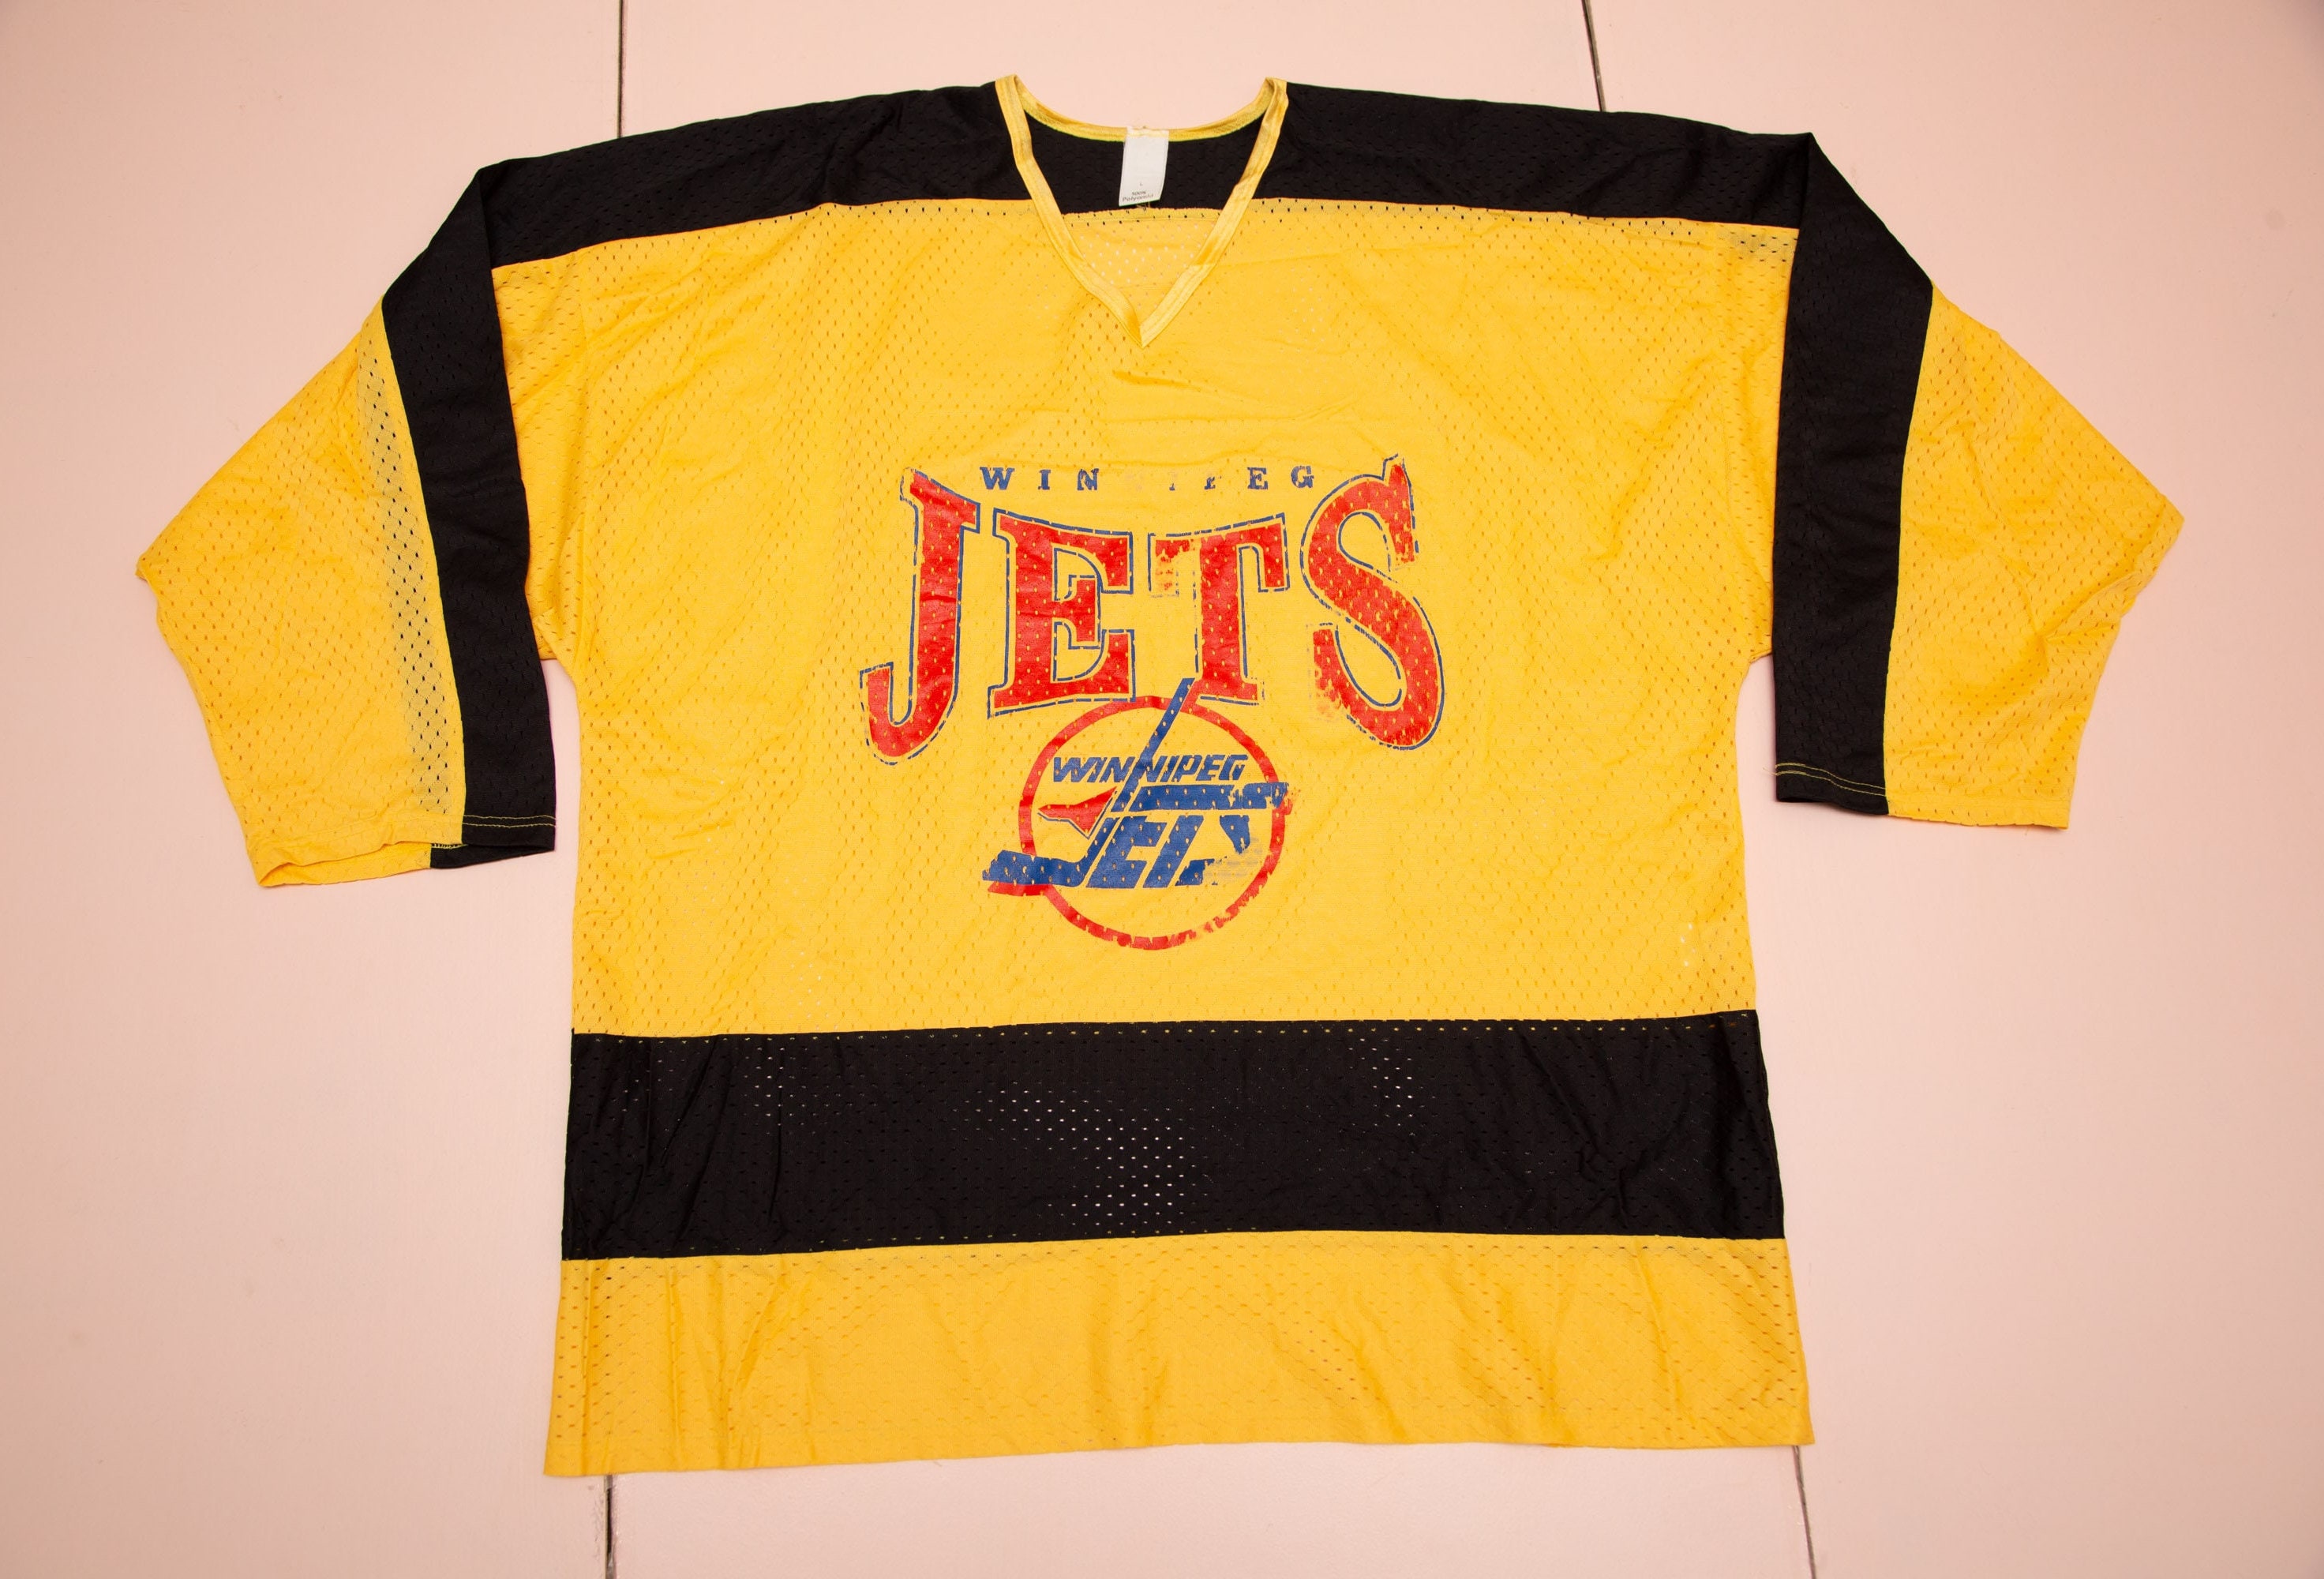 NEW Authentic Winnipeg Jets Blake Wheeler Adidas Heritage Classic Jerseys  (Size 52)